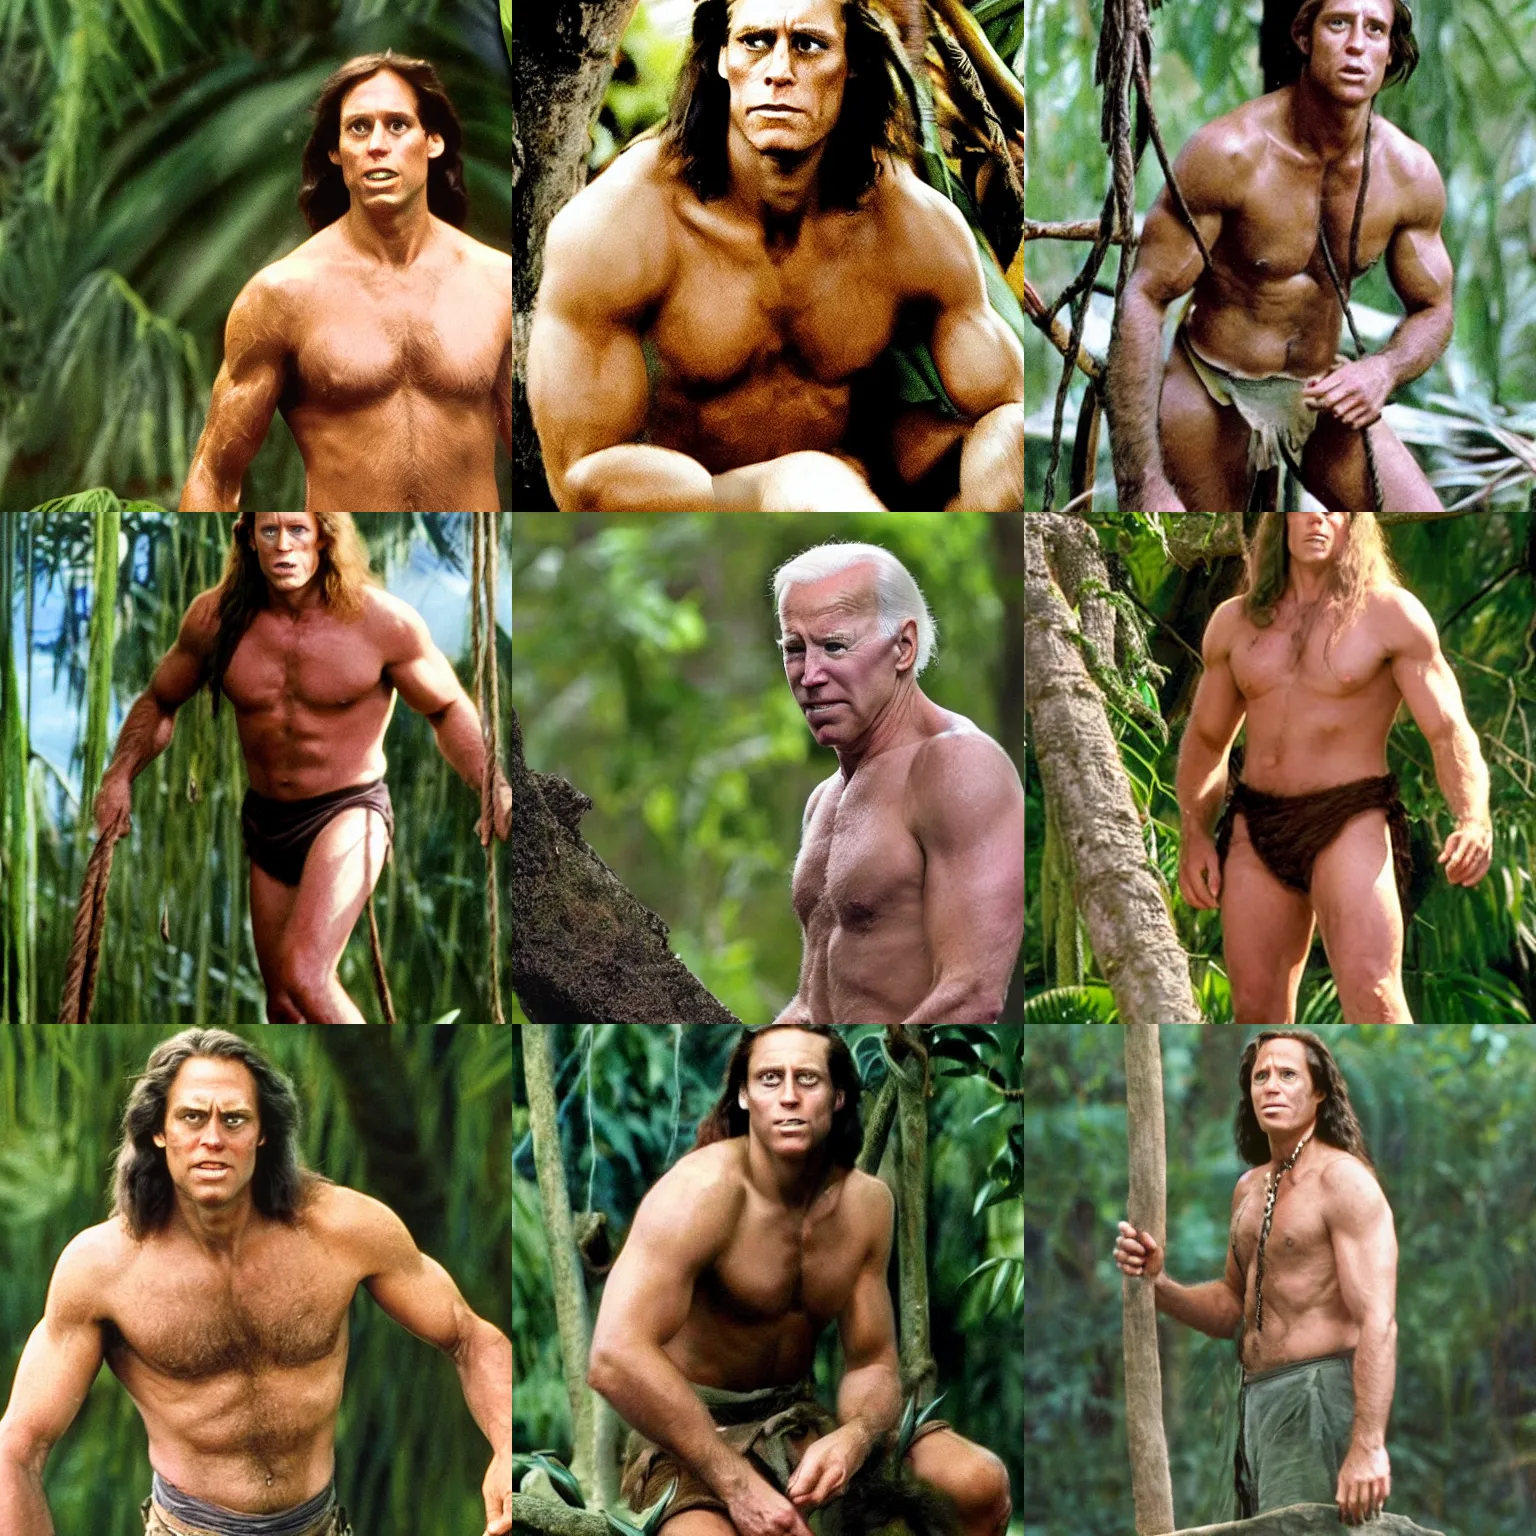 Prompt: Tarzan played by Joe Biden